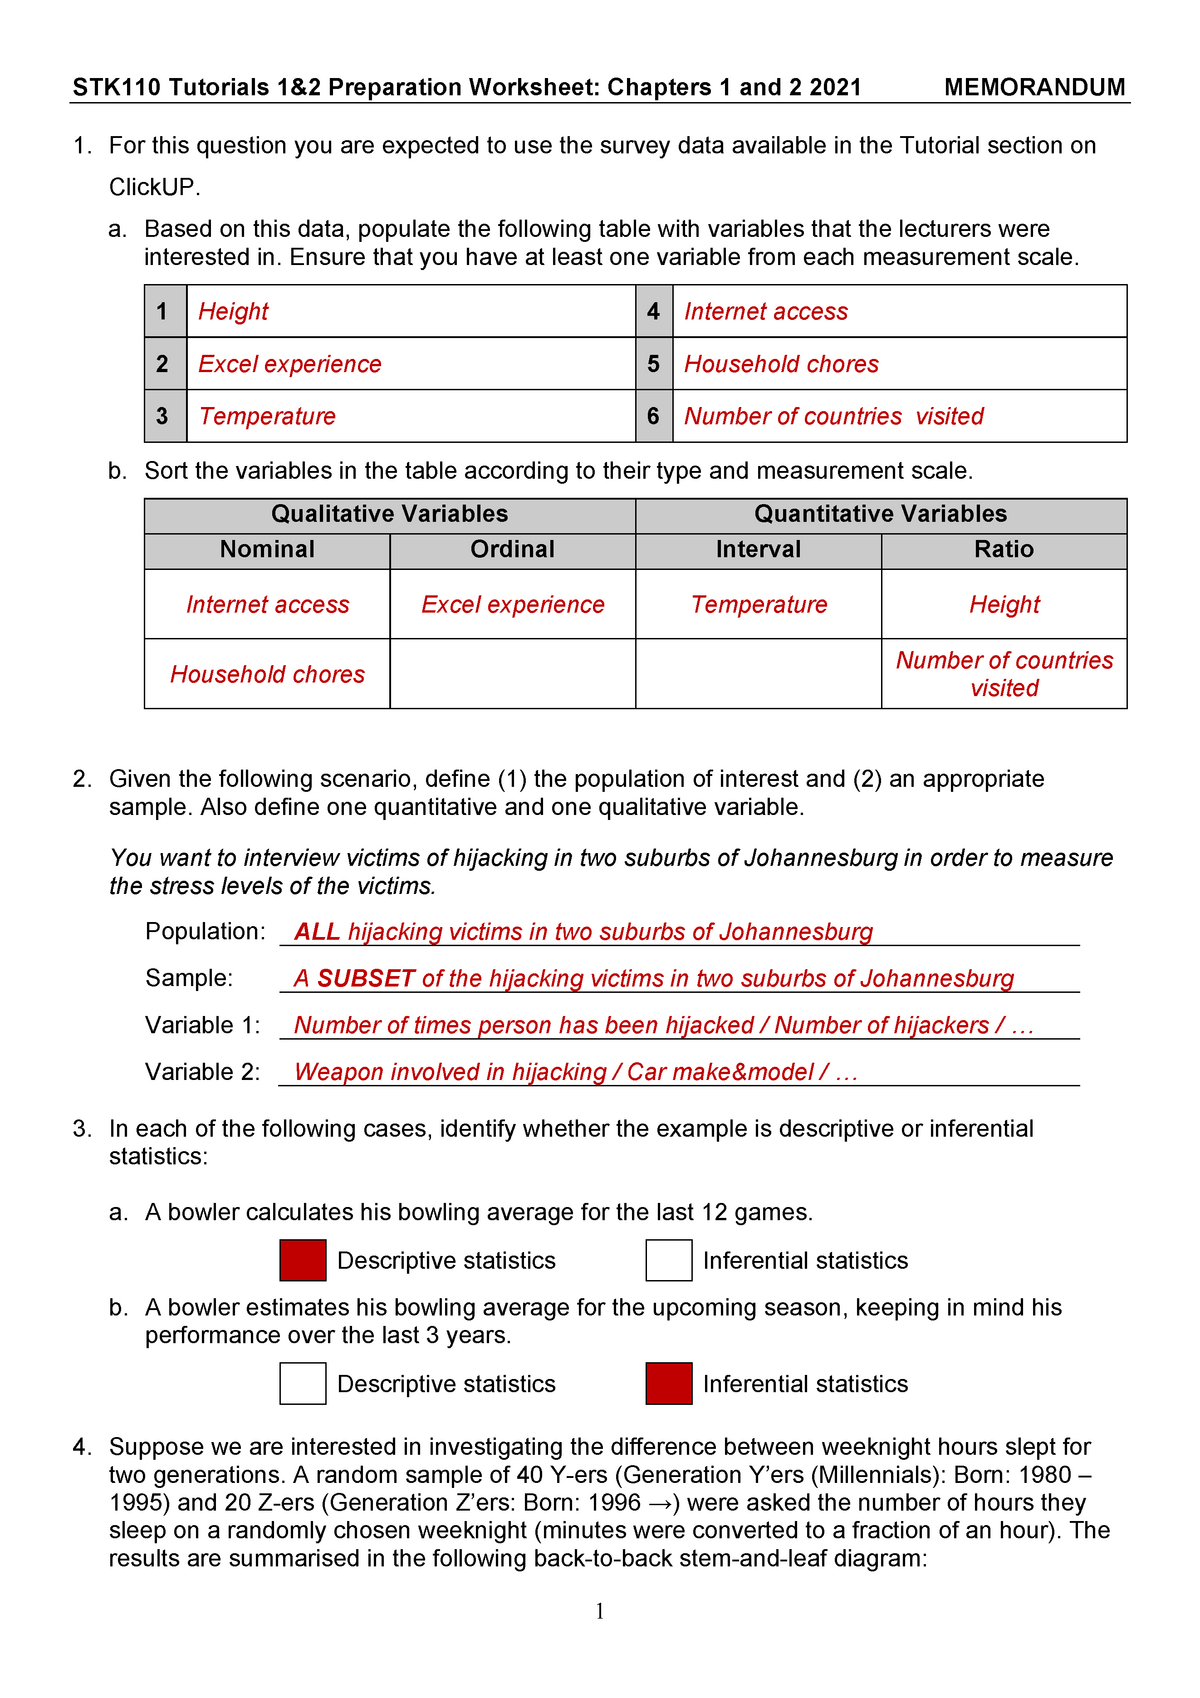 STK110 TUT 1 & 2 Preparation Sheet - 2021 MEMO & QUESTIONS - 1 STK110 ...